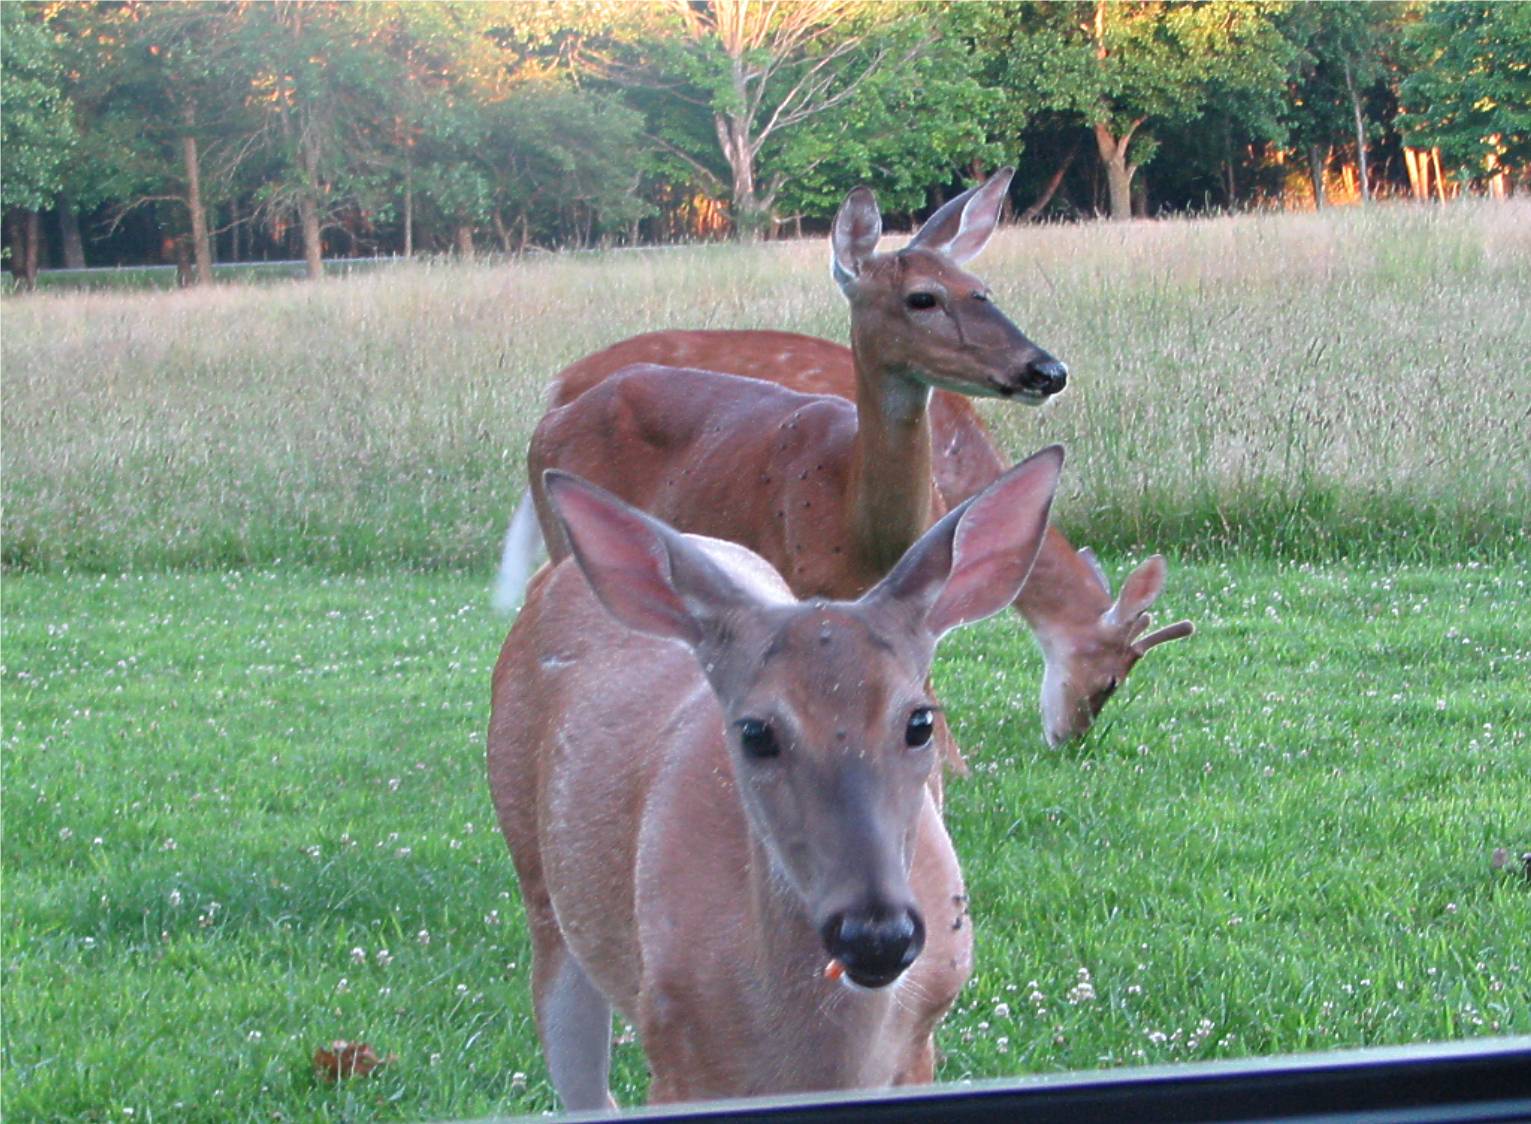 two deers standing in a grassy field outside